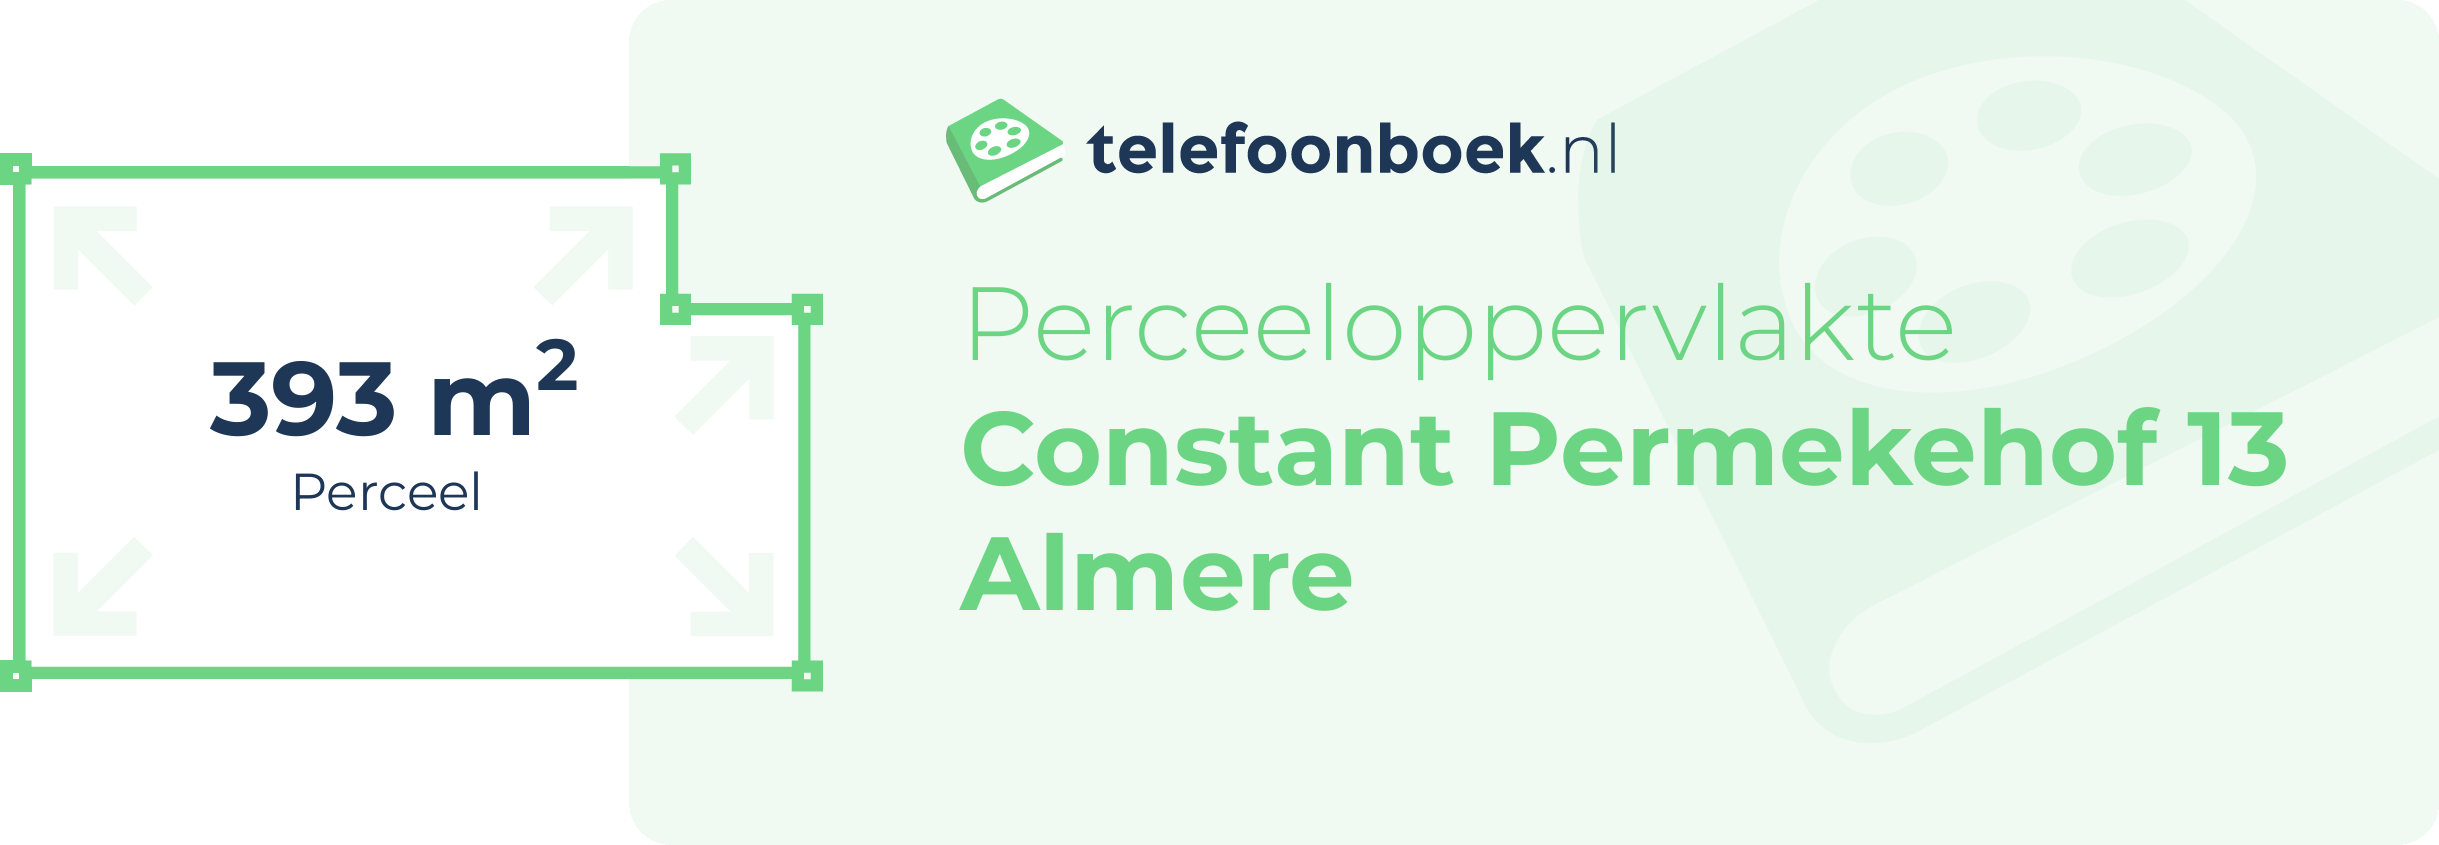 Perceeloppervlakte Constant Permekehof 13 Almere